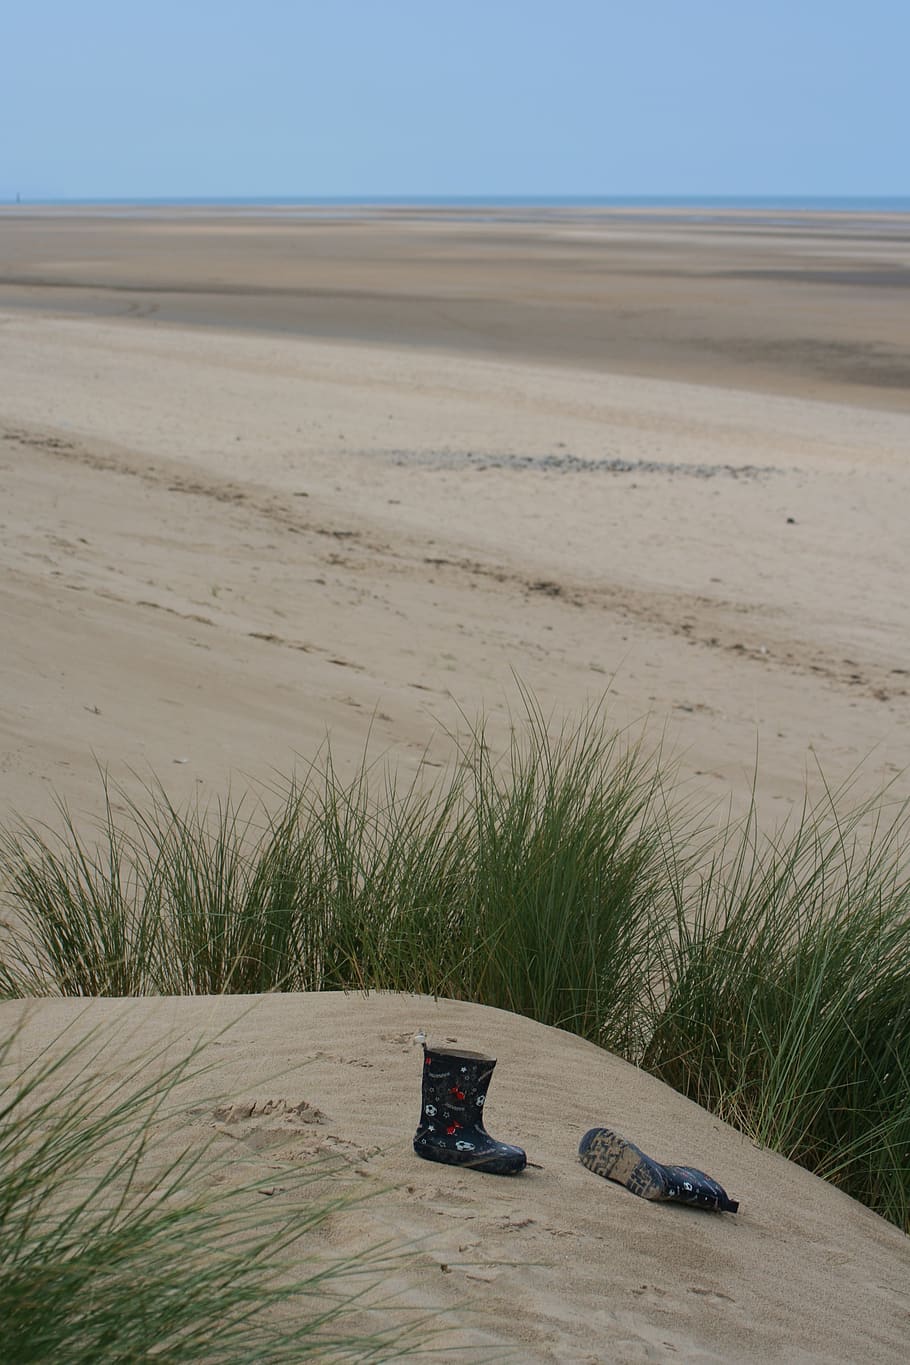 talacre beach, wales, uk, wellies, children's wellington boots, children's rubber boots, dunes, sand, beach, shore